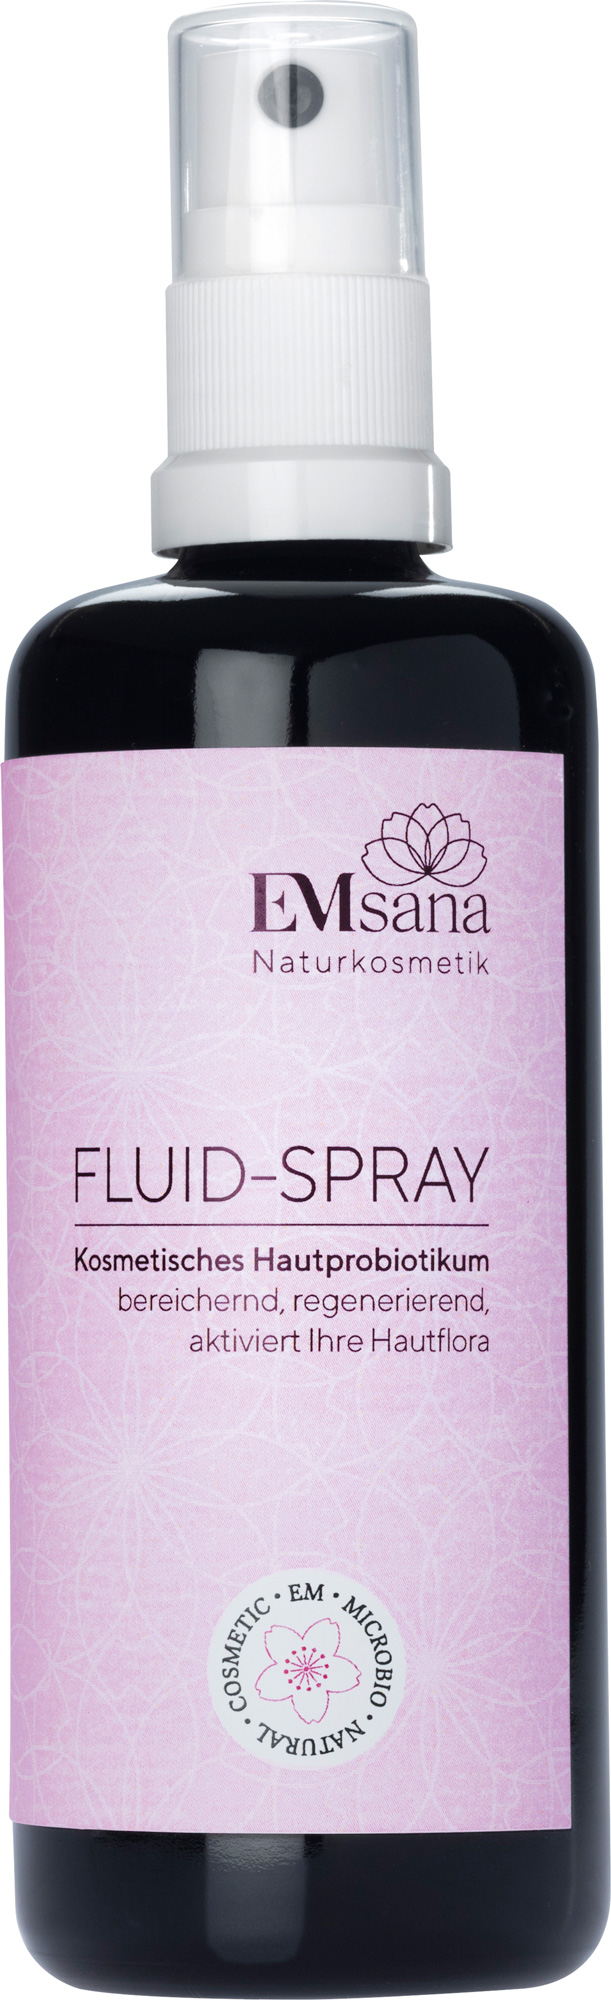 Fluid-Spray von EMSana